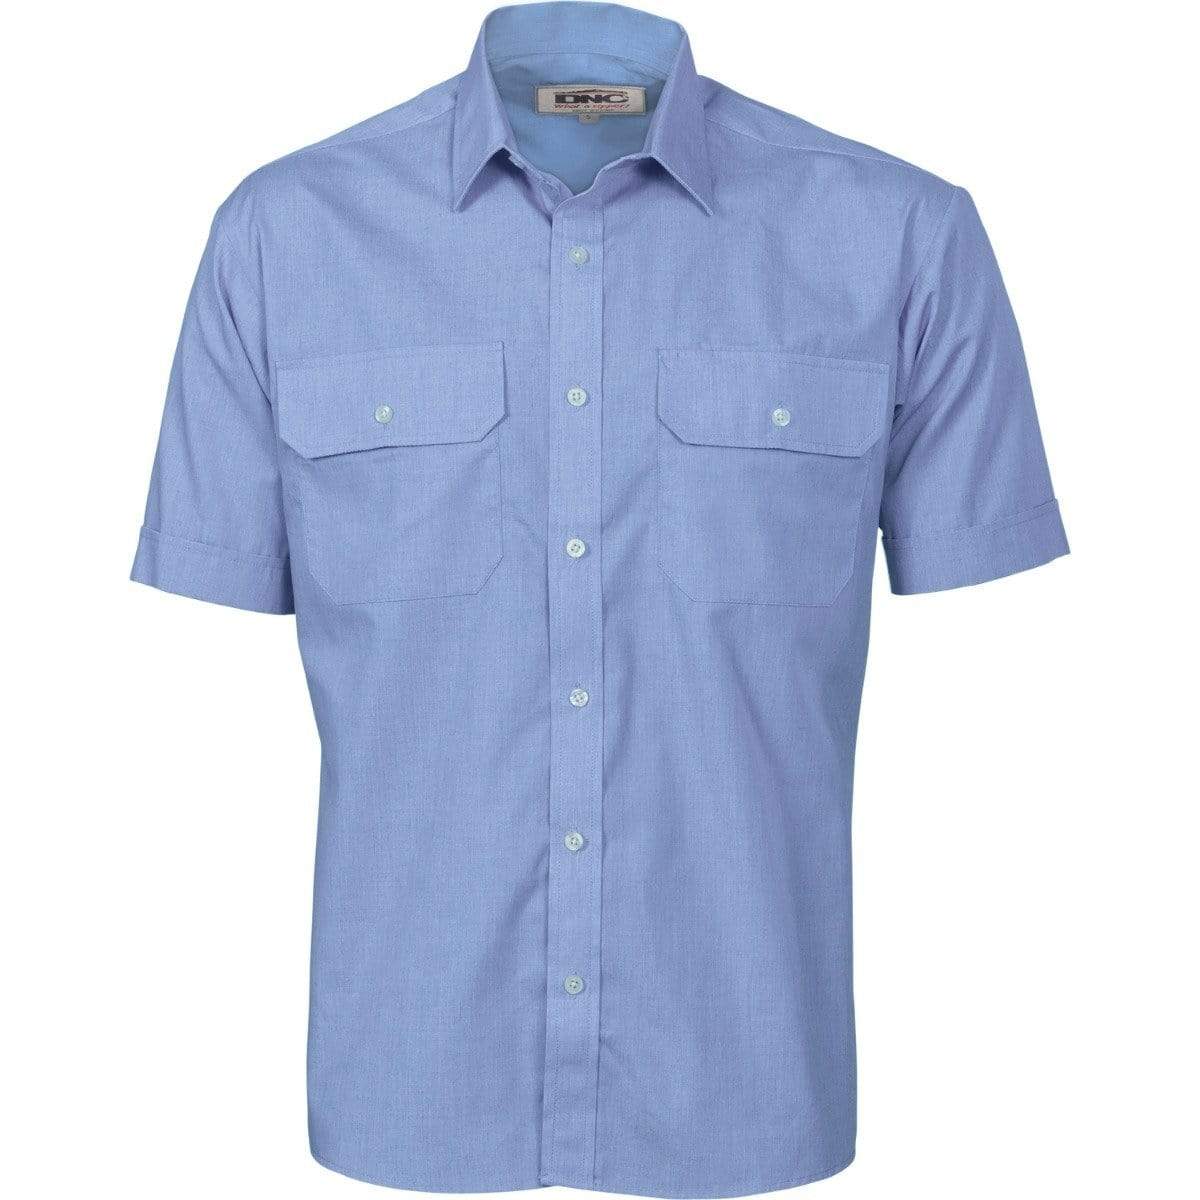 Dnc Workwear Polyester Cotton Short Sleeve Work Shirt - 3211 Work Wear DNC Workwear Chambray XS 